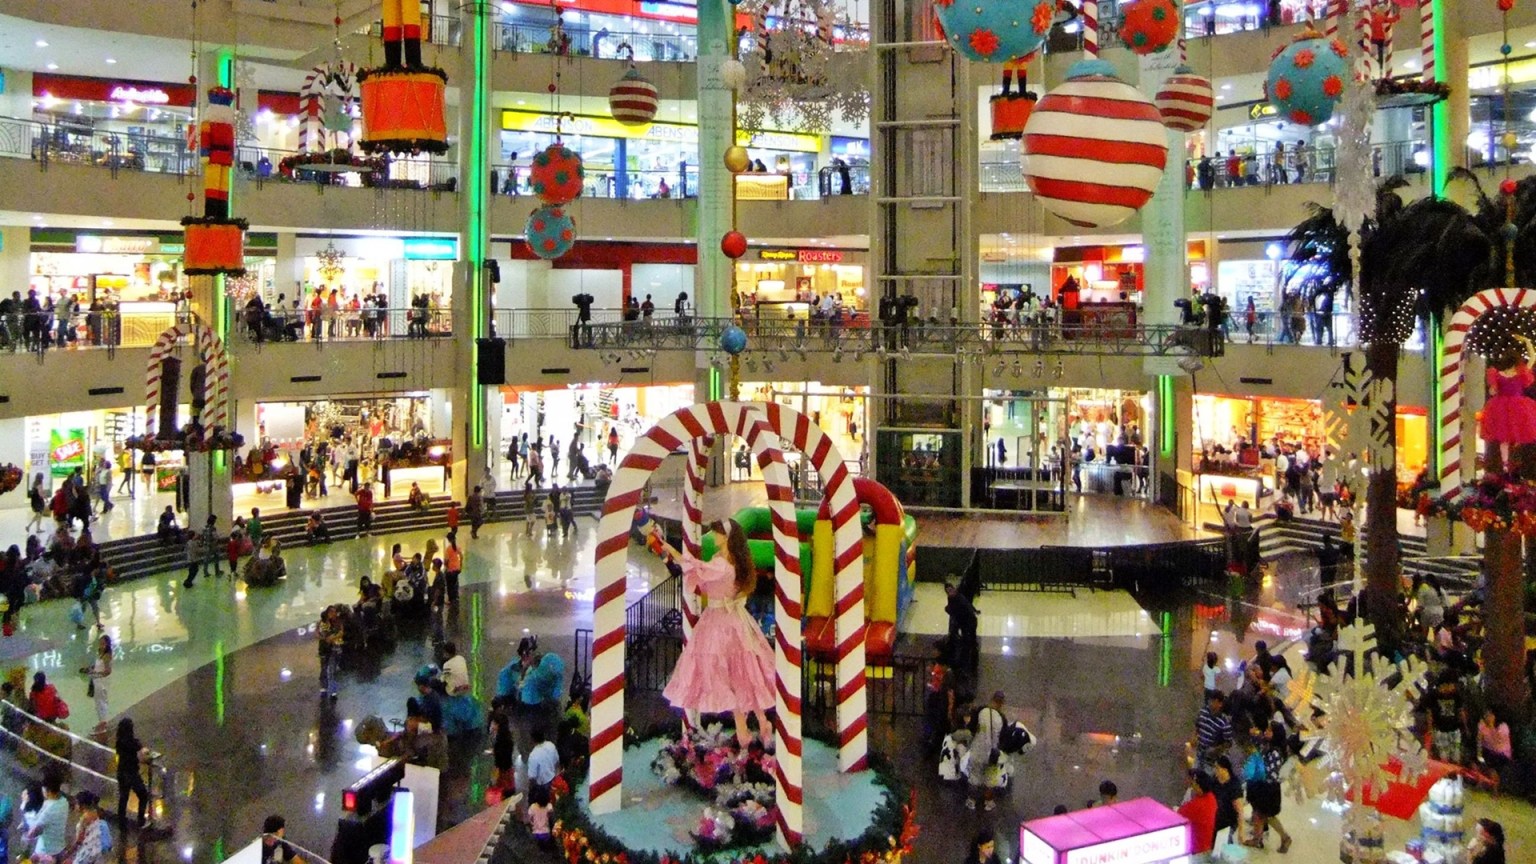 Karnataka govt considering opening malls,decision likely soon: CM Yediyurappa